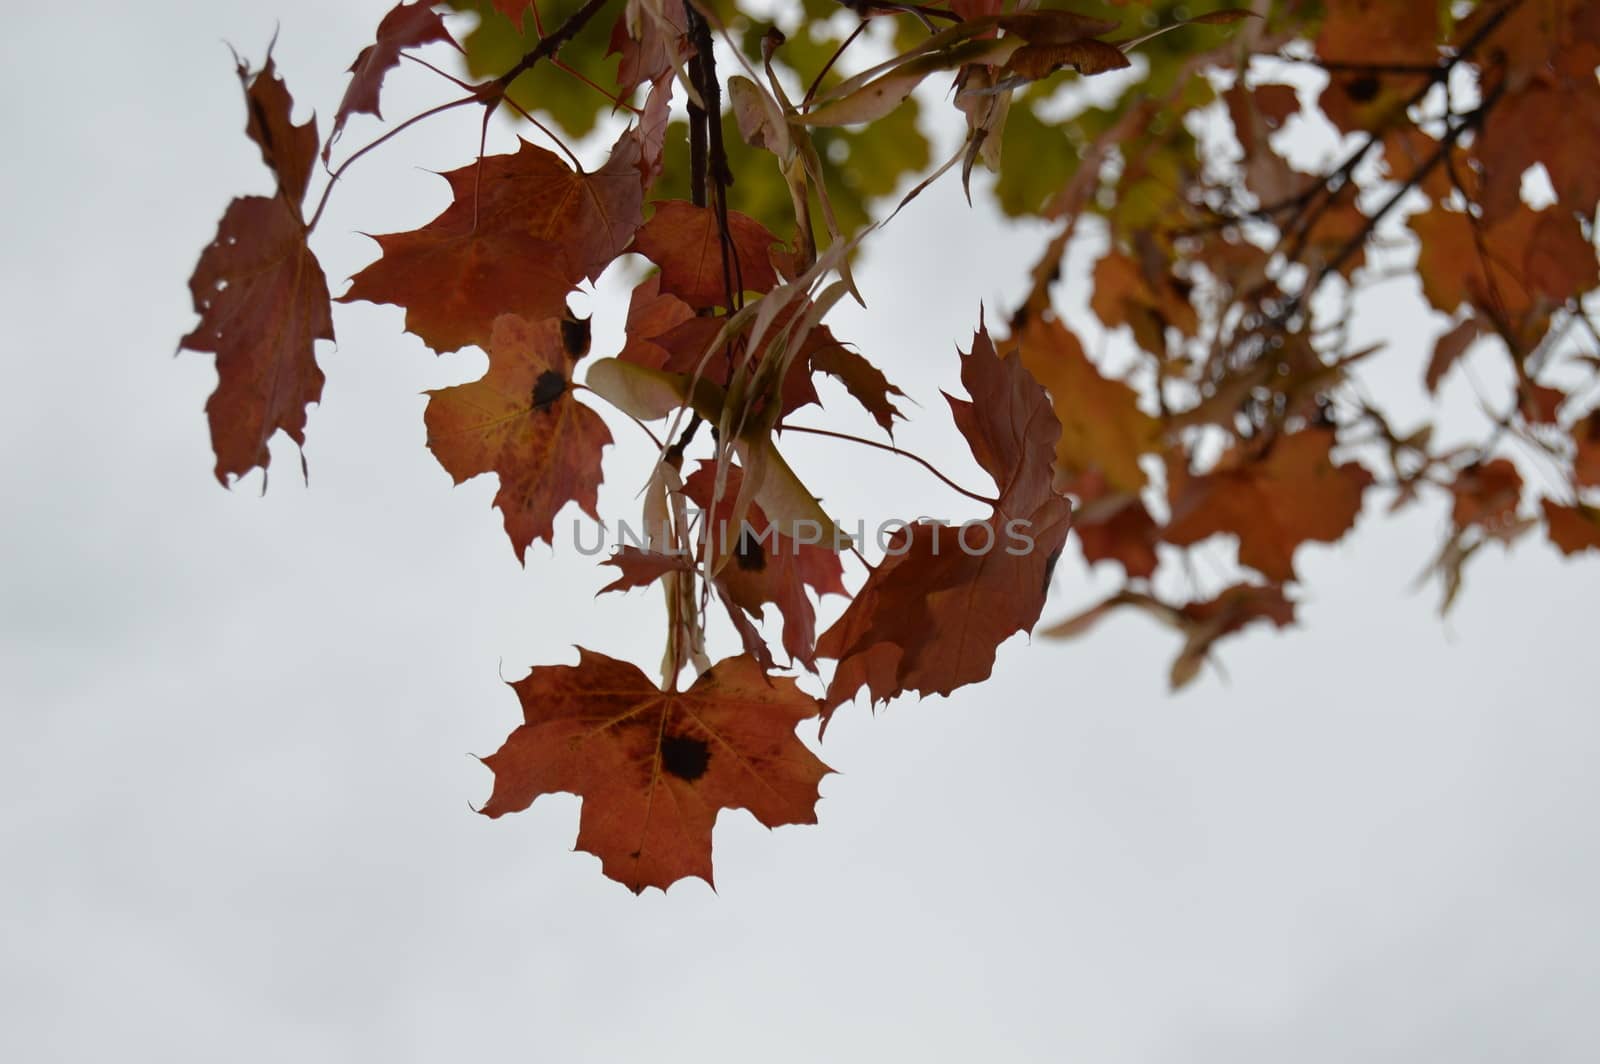 Autumn leaf by Meretemy@hotmail.com